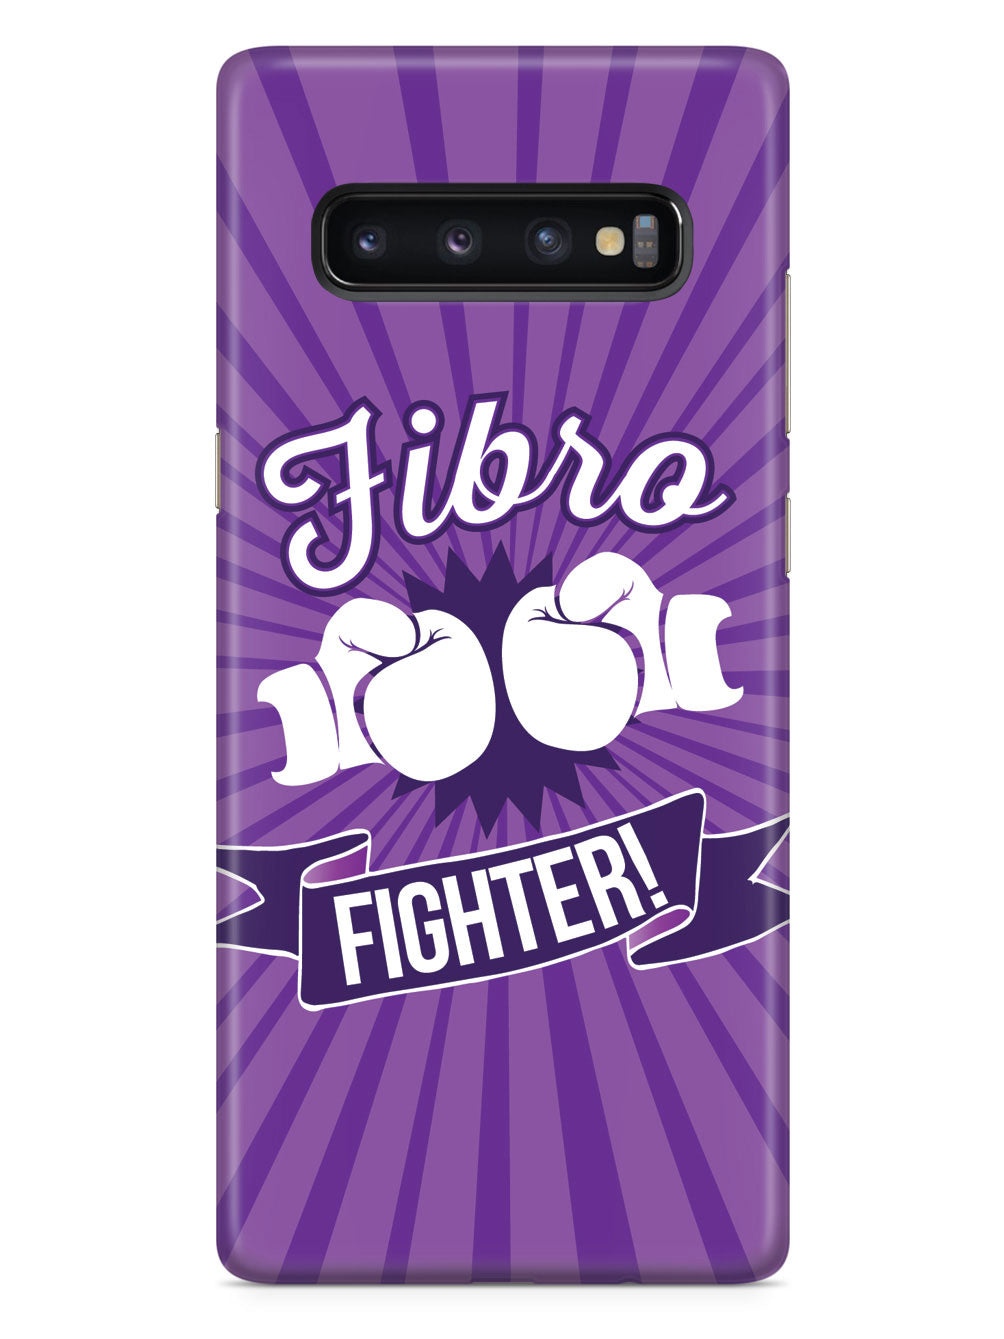 Fibro Fighter! Fibromyalgia Awareness  Case